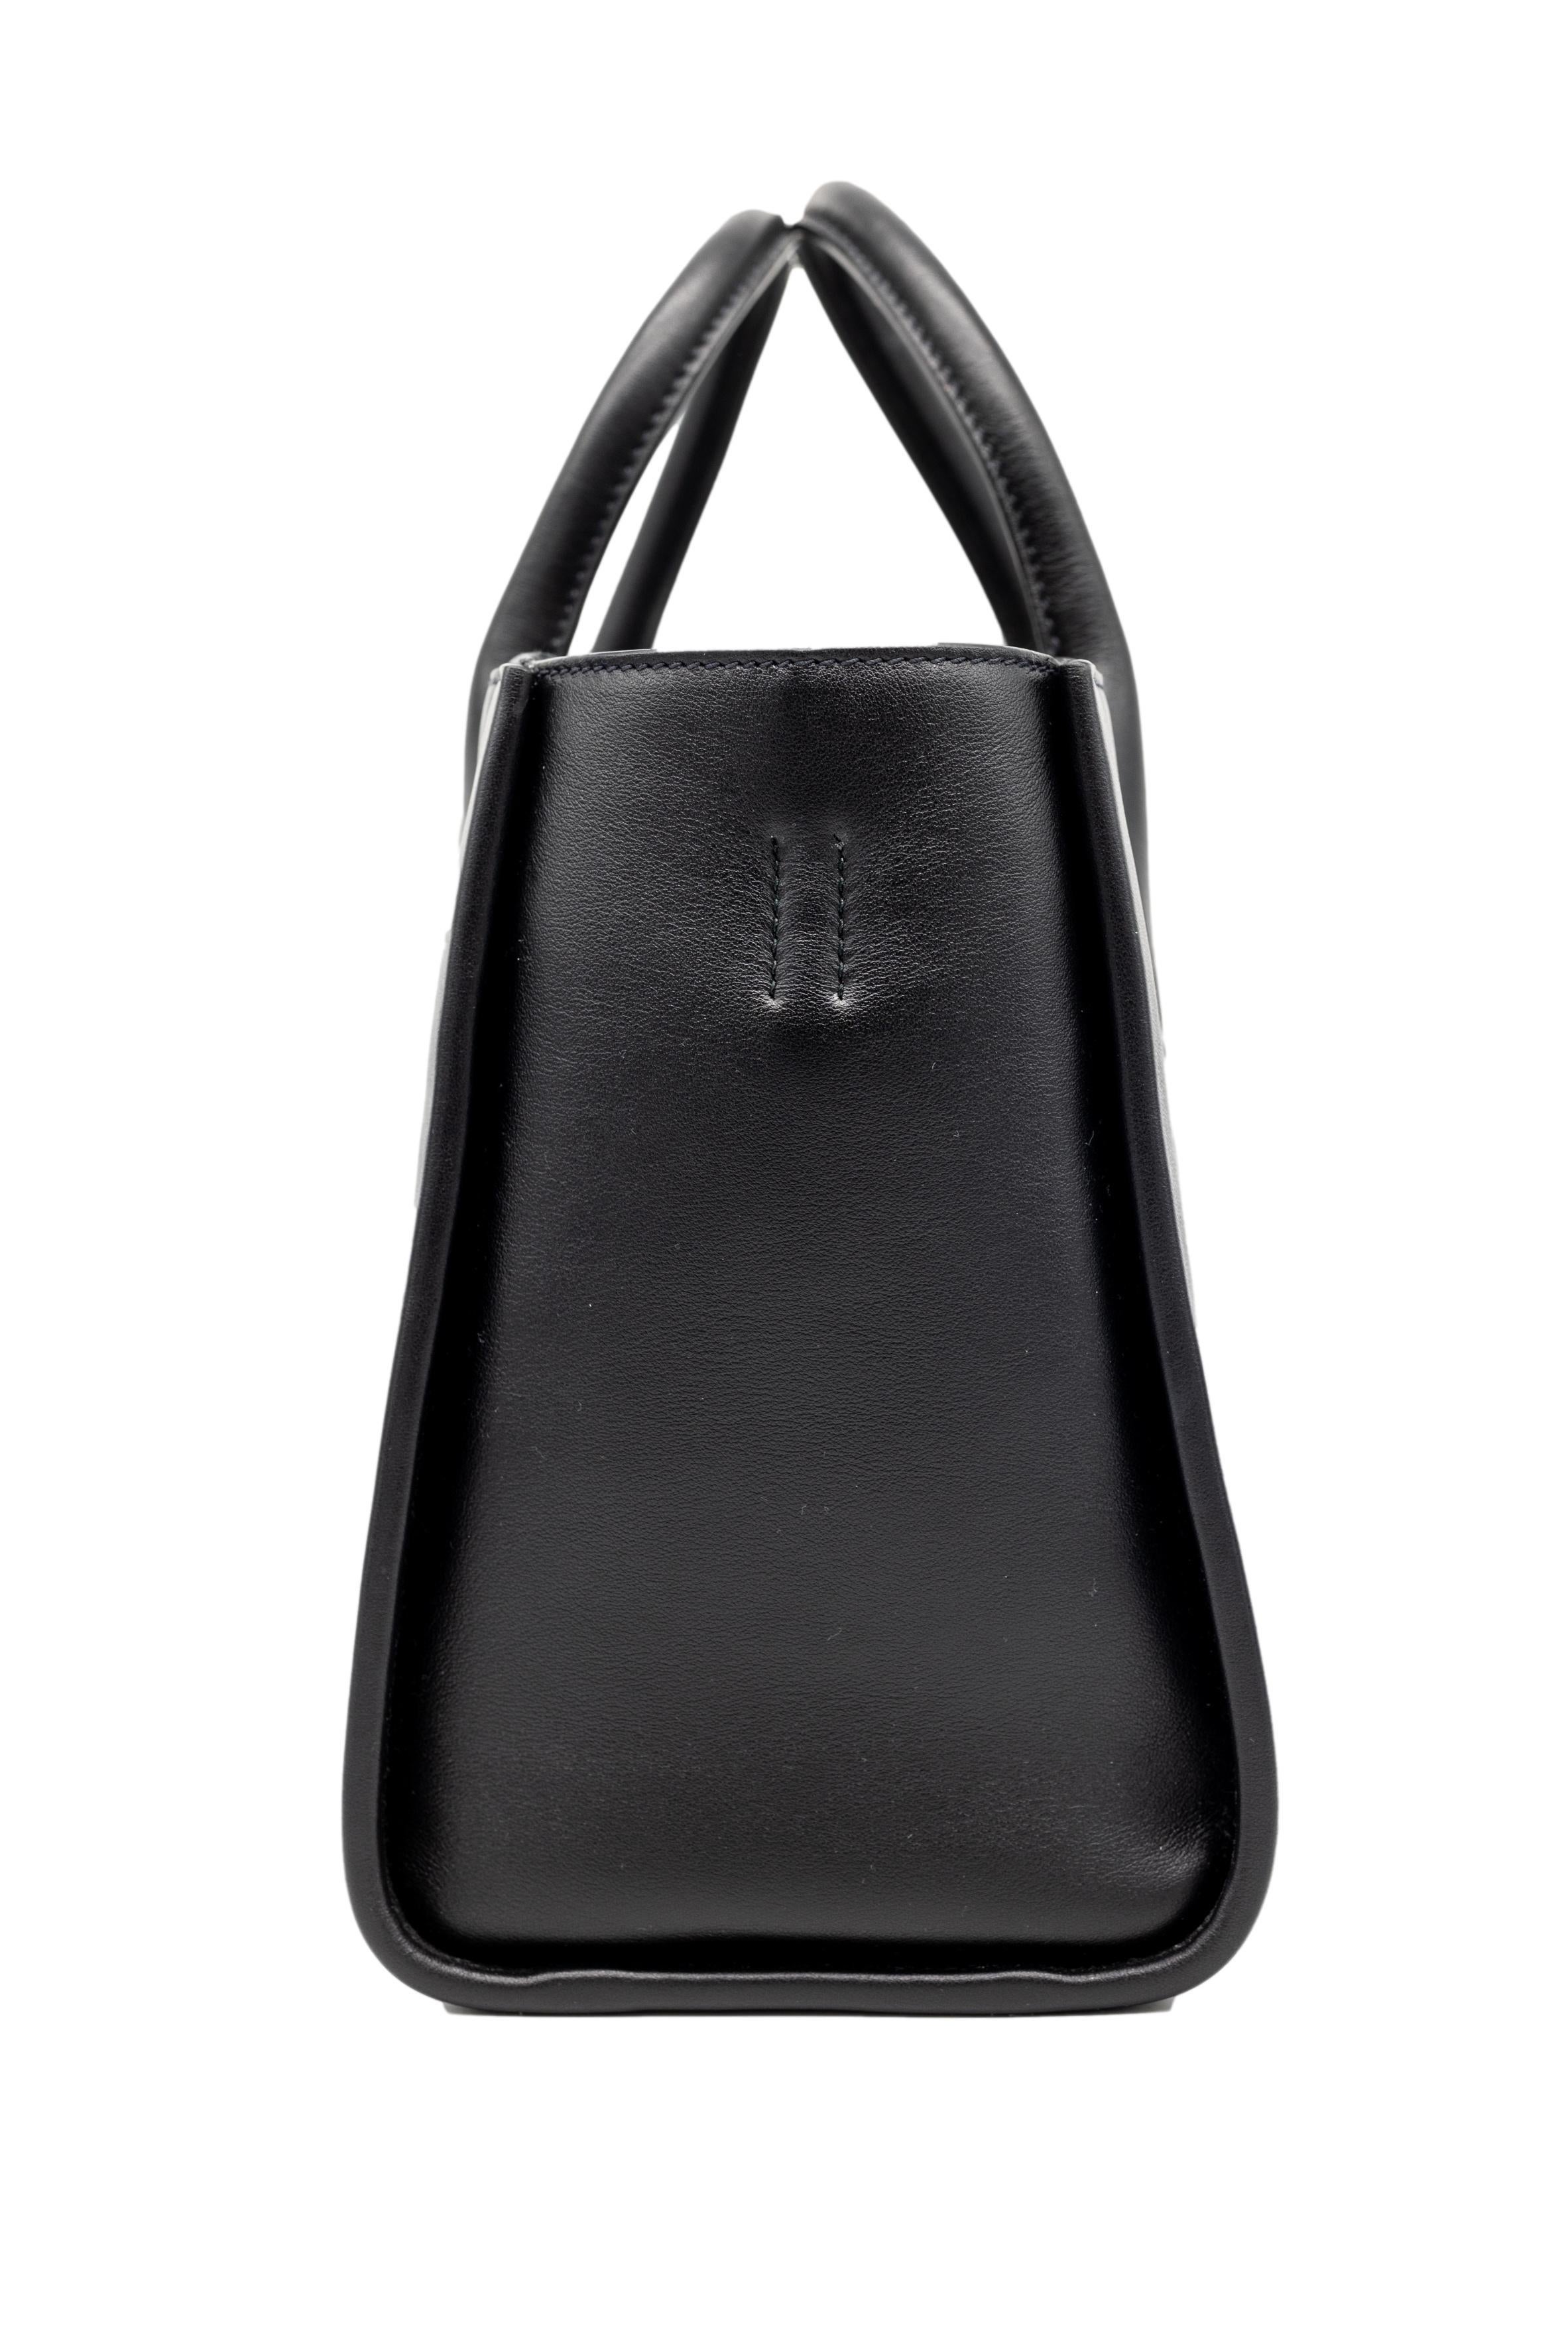 Women's or Men's Prada Black Vitello Calfskin Leather Grace Lux Concept Shoulder Tote, 2018.